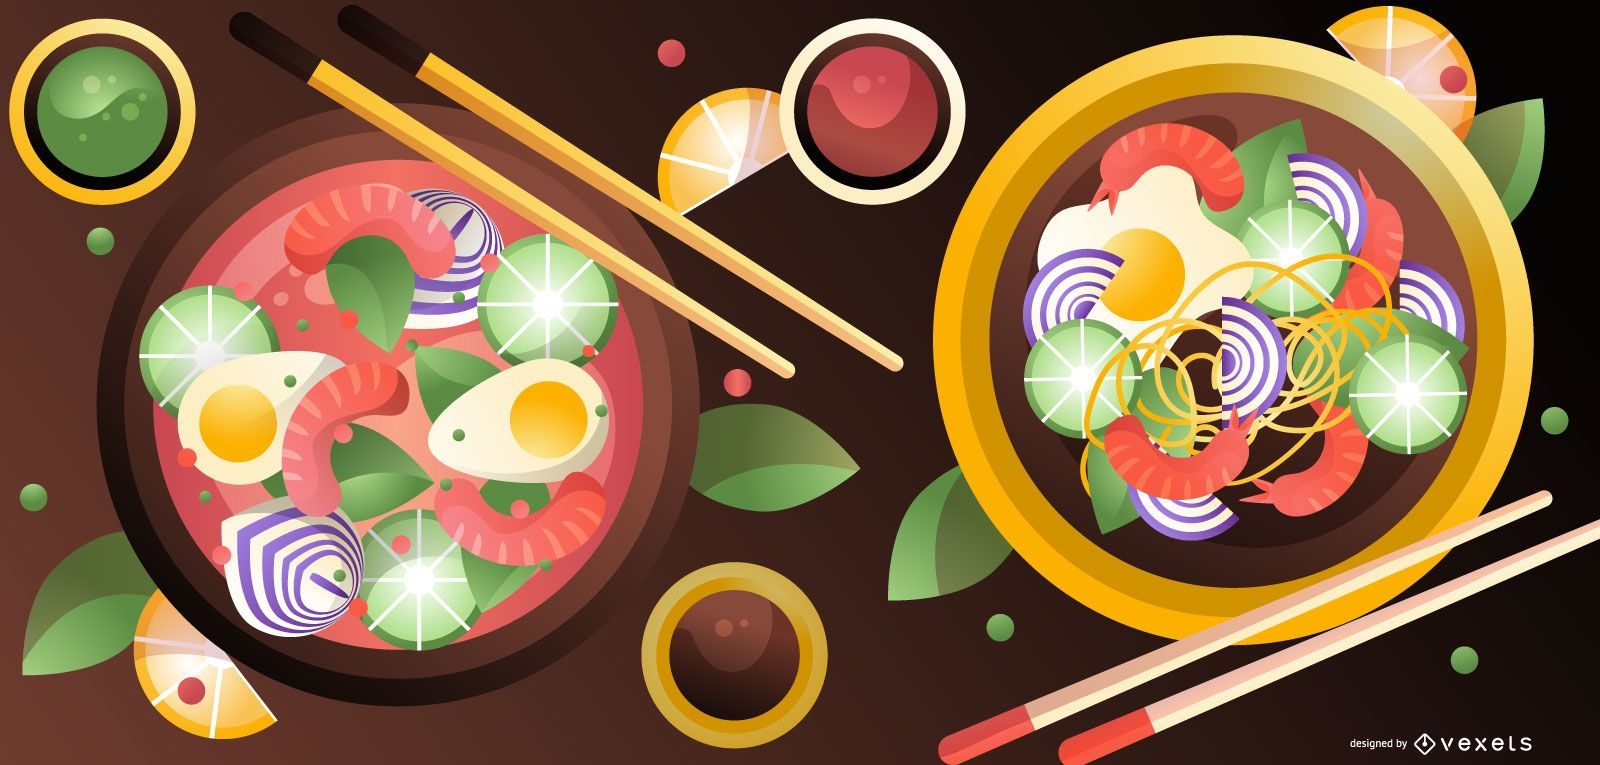 Ilustraci?n de comida japonesa de ramen